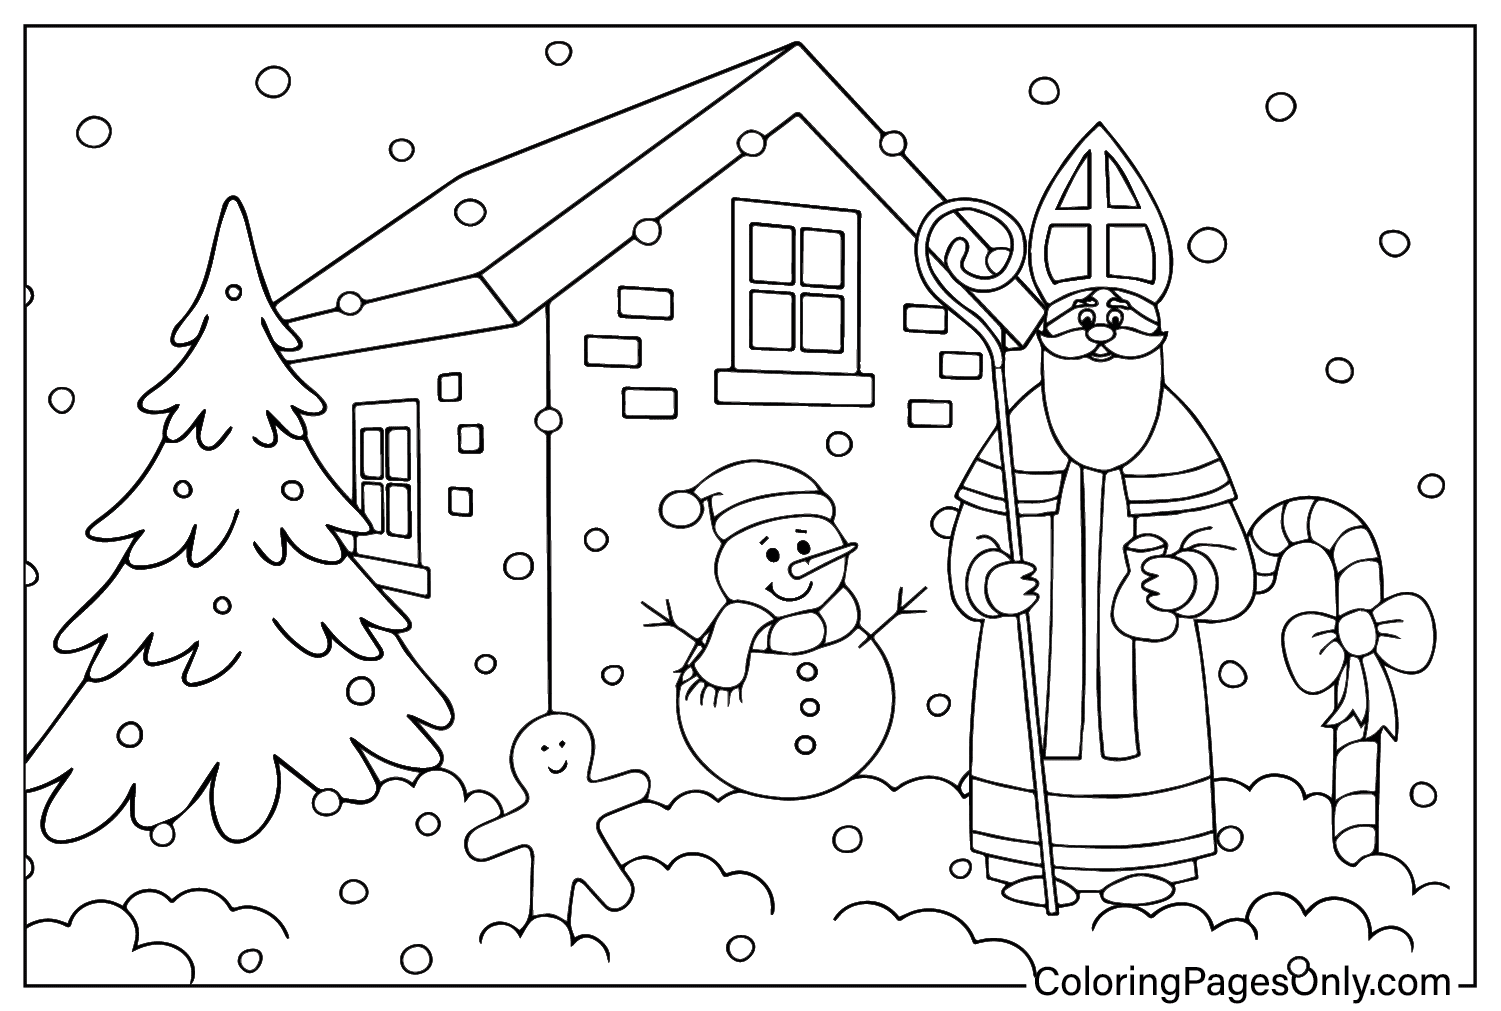 Saint Nicholas and Snowman Coloring Page from Saint Nicholas Day